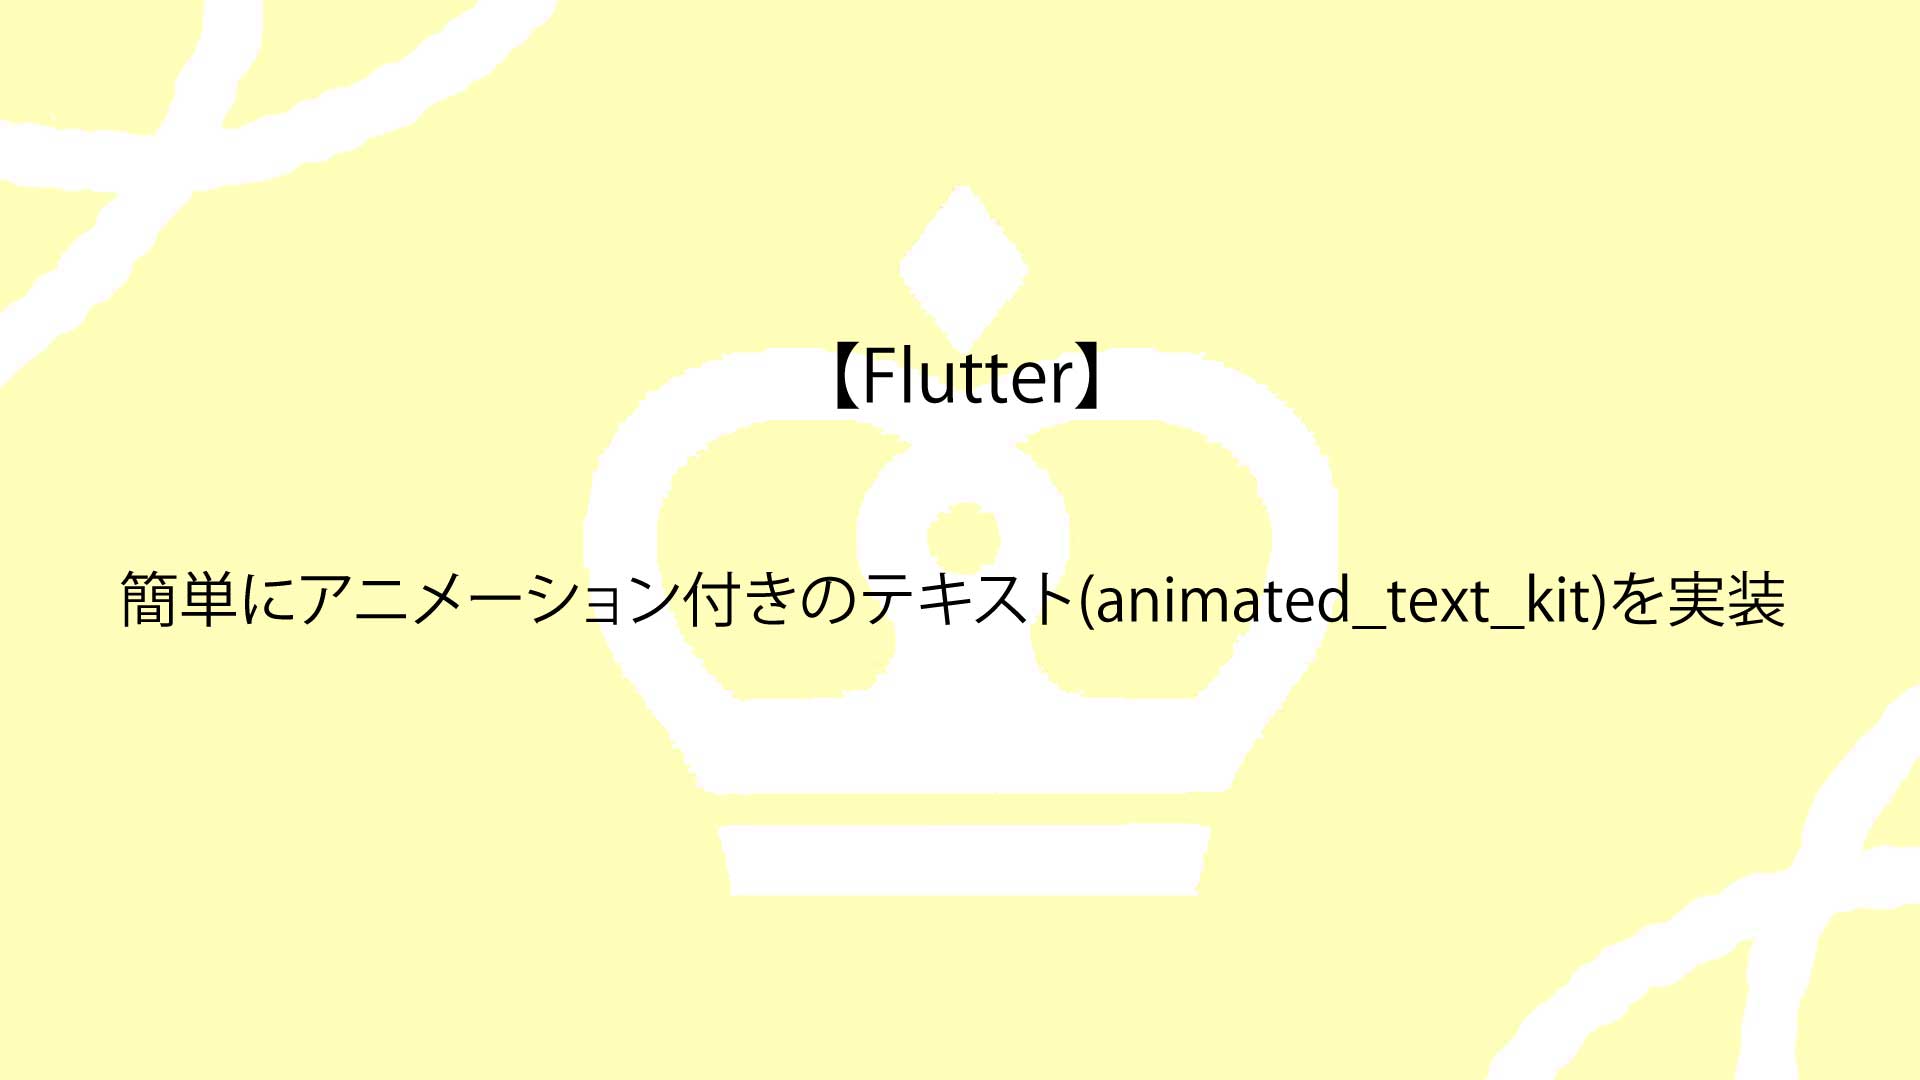 【Flutter】簡単にアニメーション付きのテキスト(animated_text_kit)を実装する方法について解説